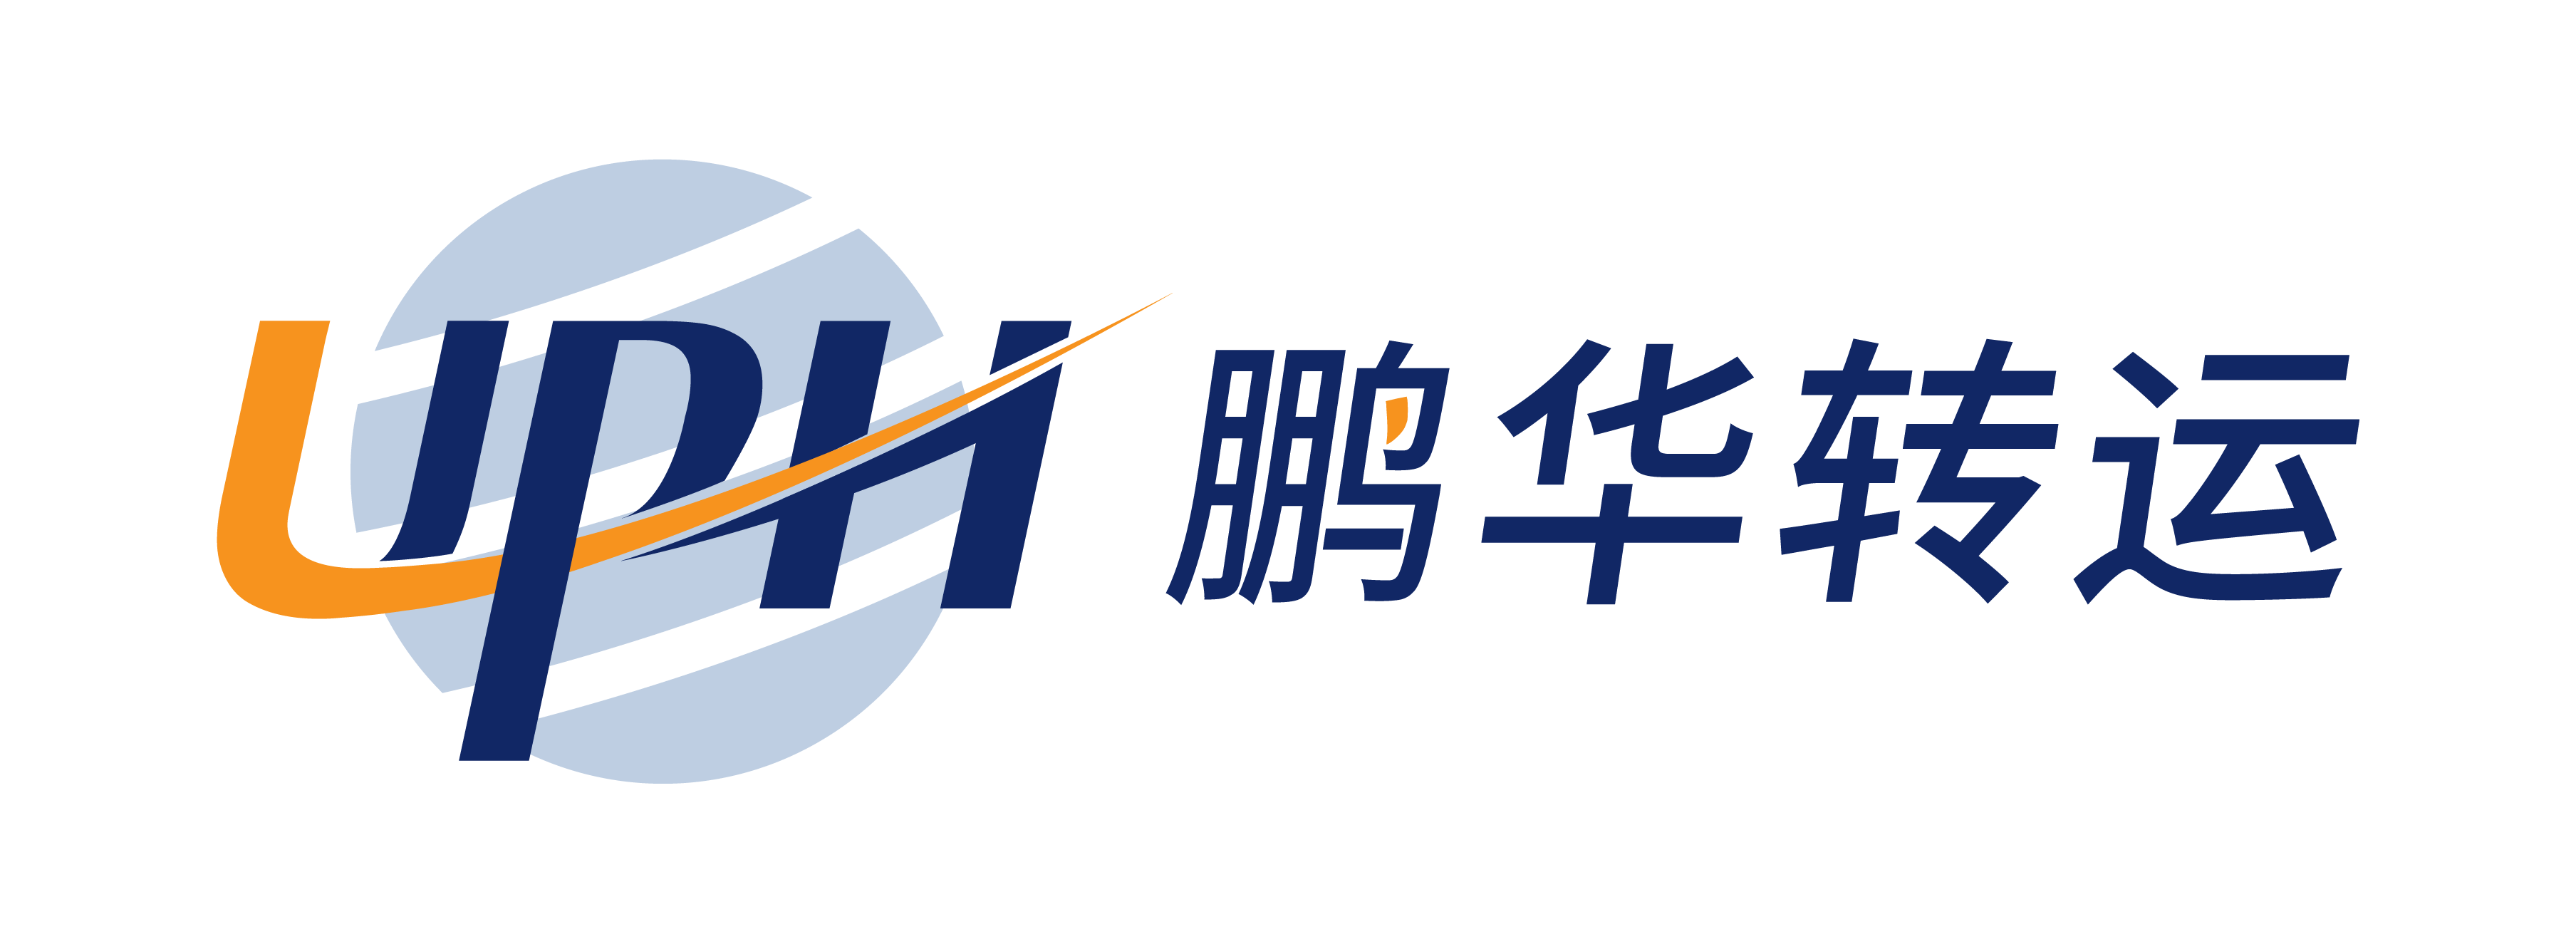 鵬華轉運logo